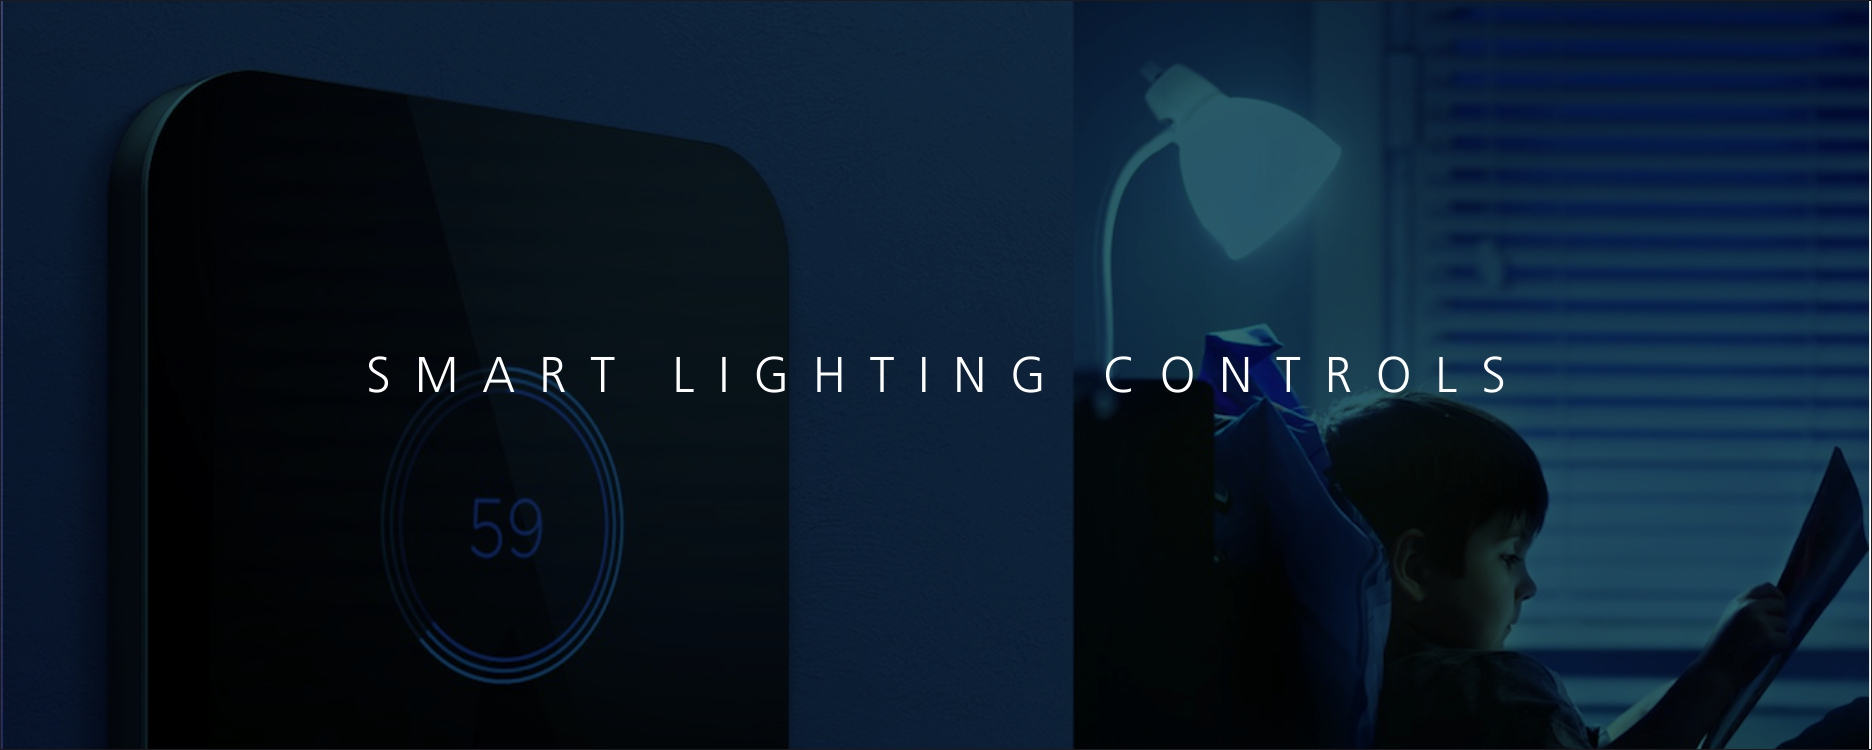 Lighting-controls